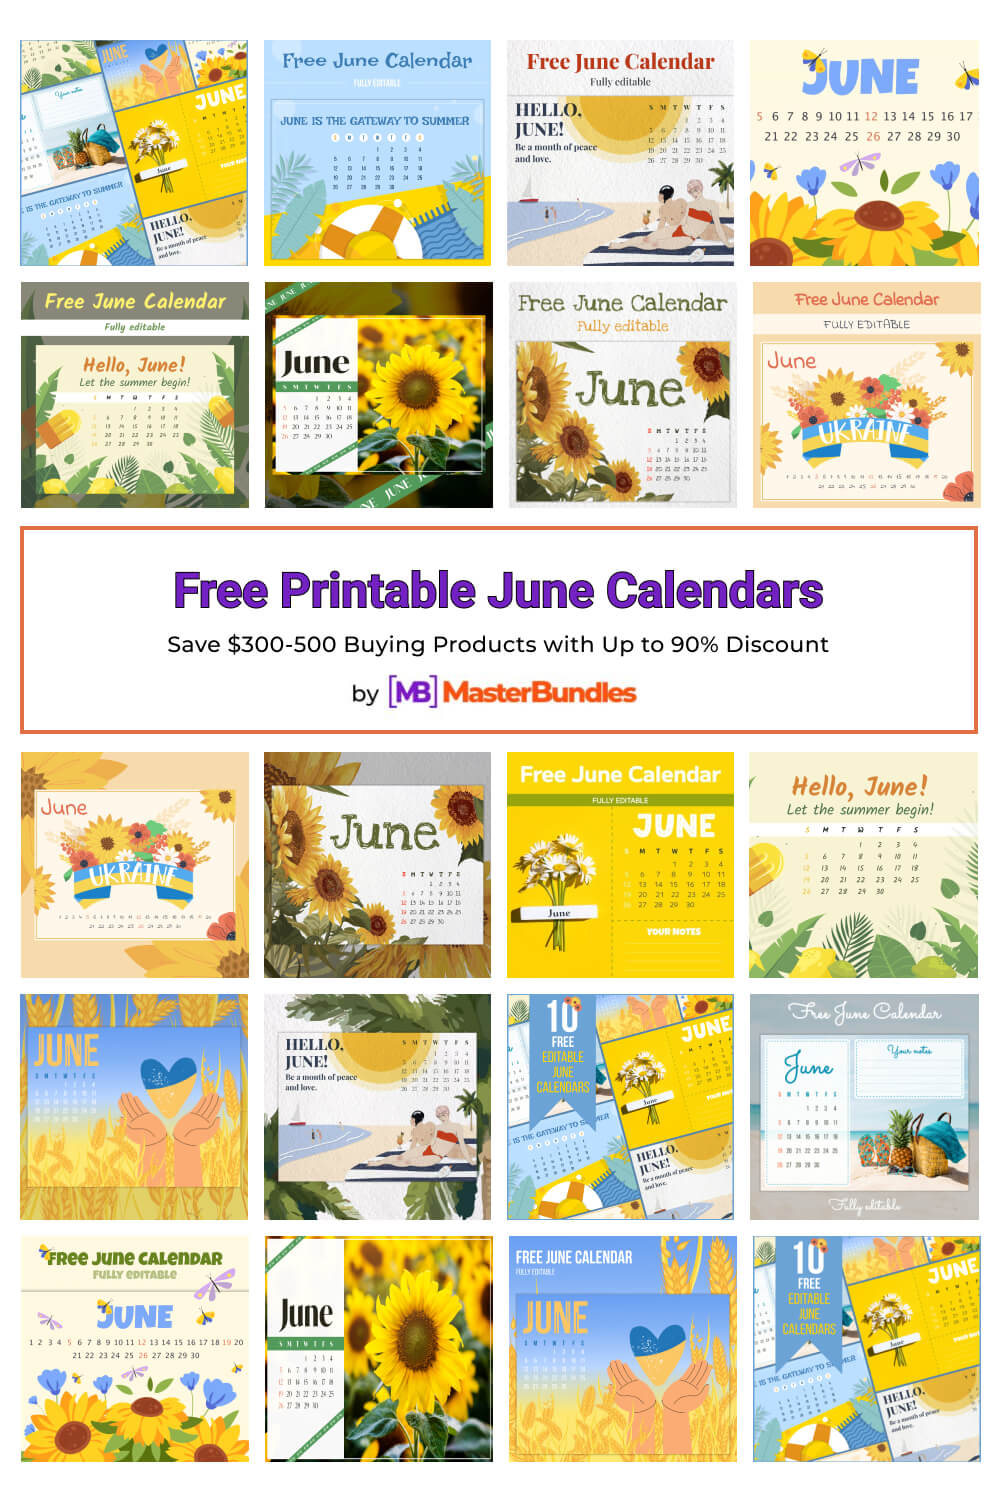 free printable june calendars pinterest image.